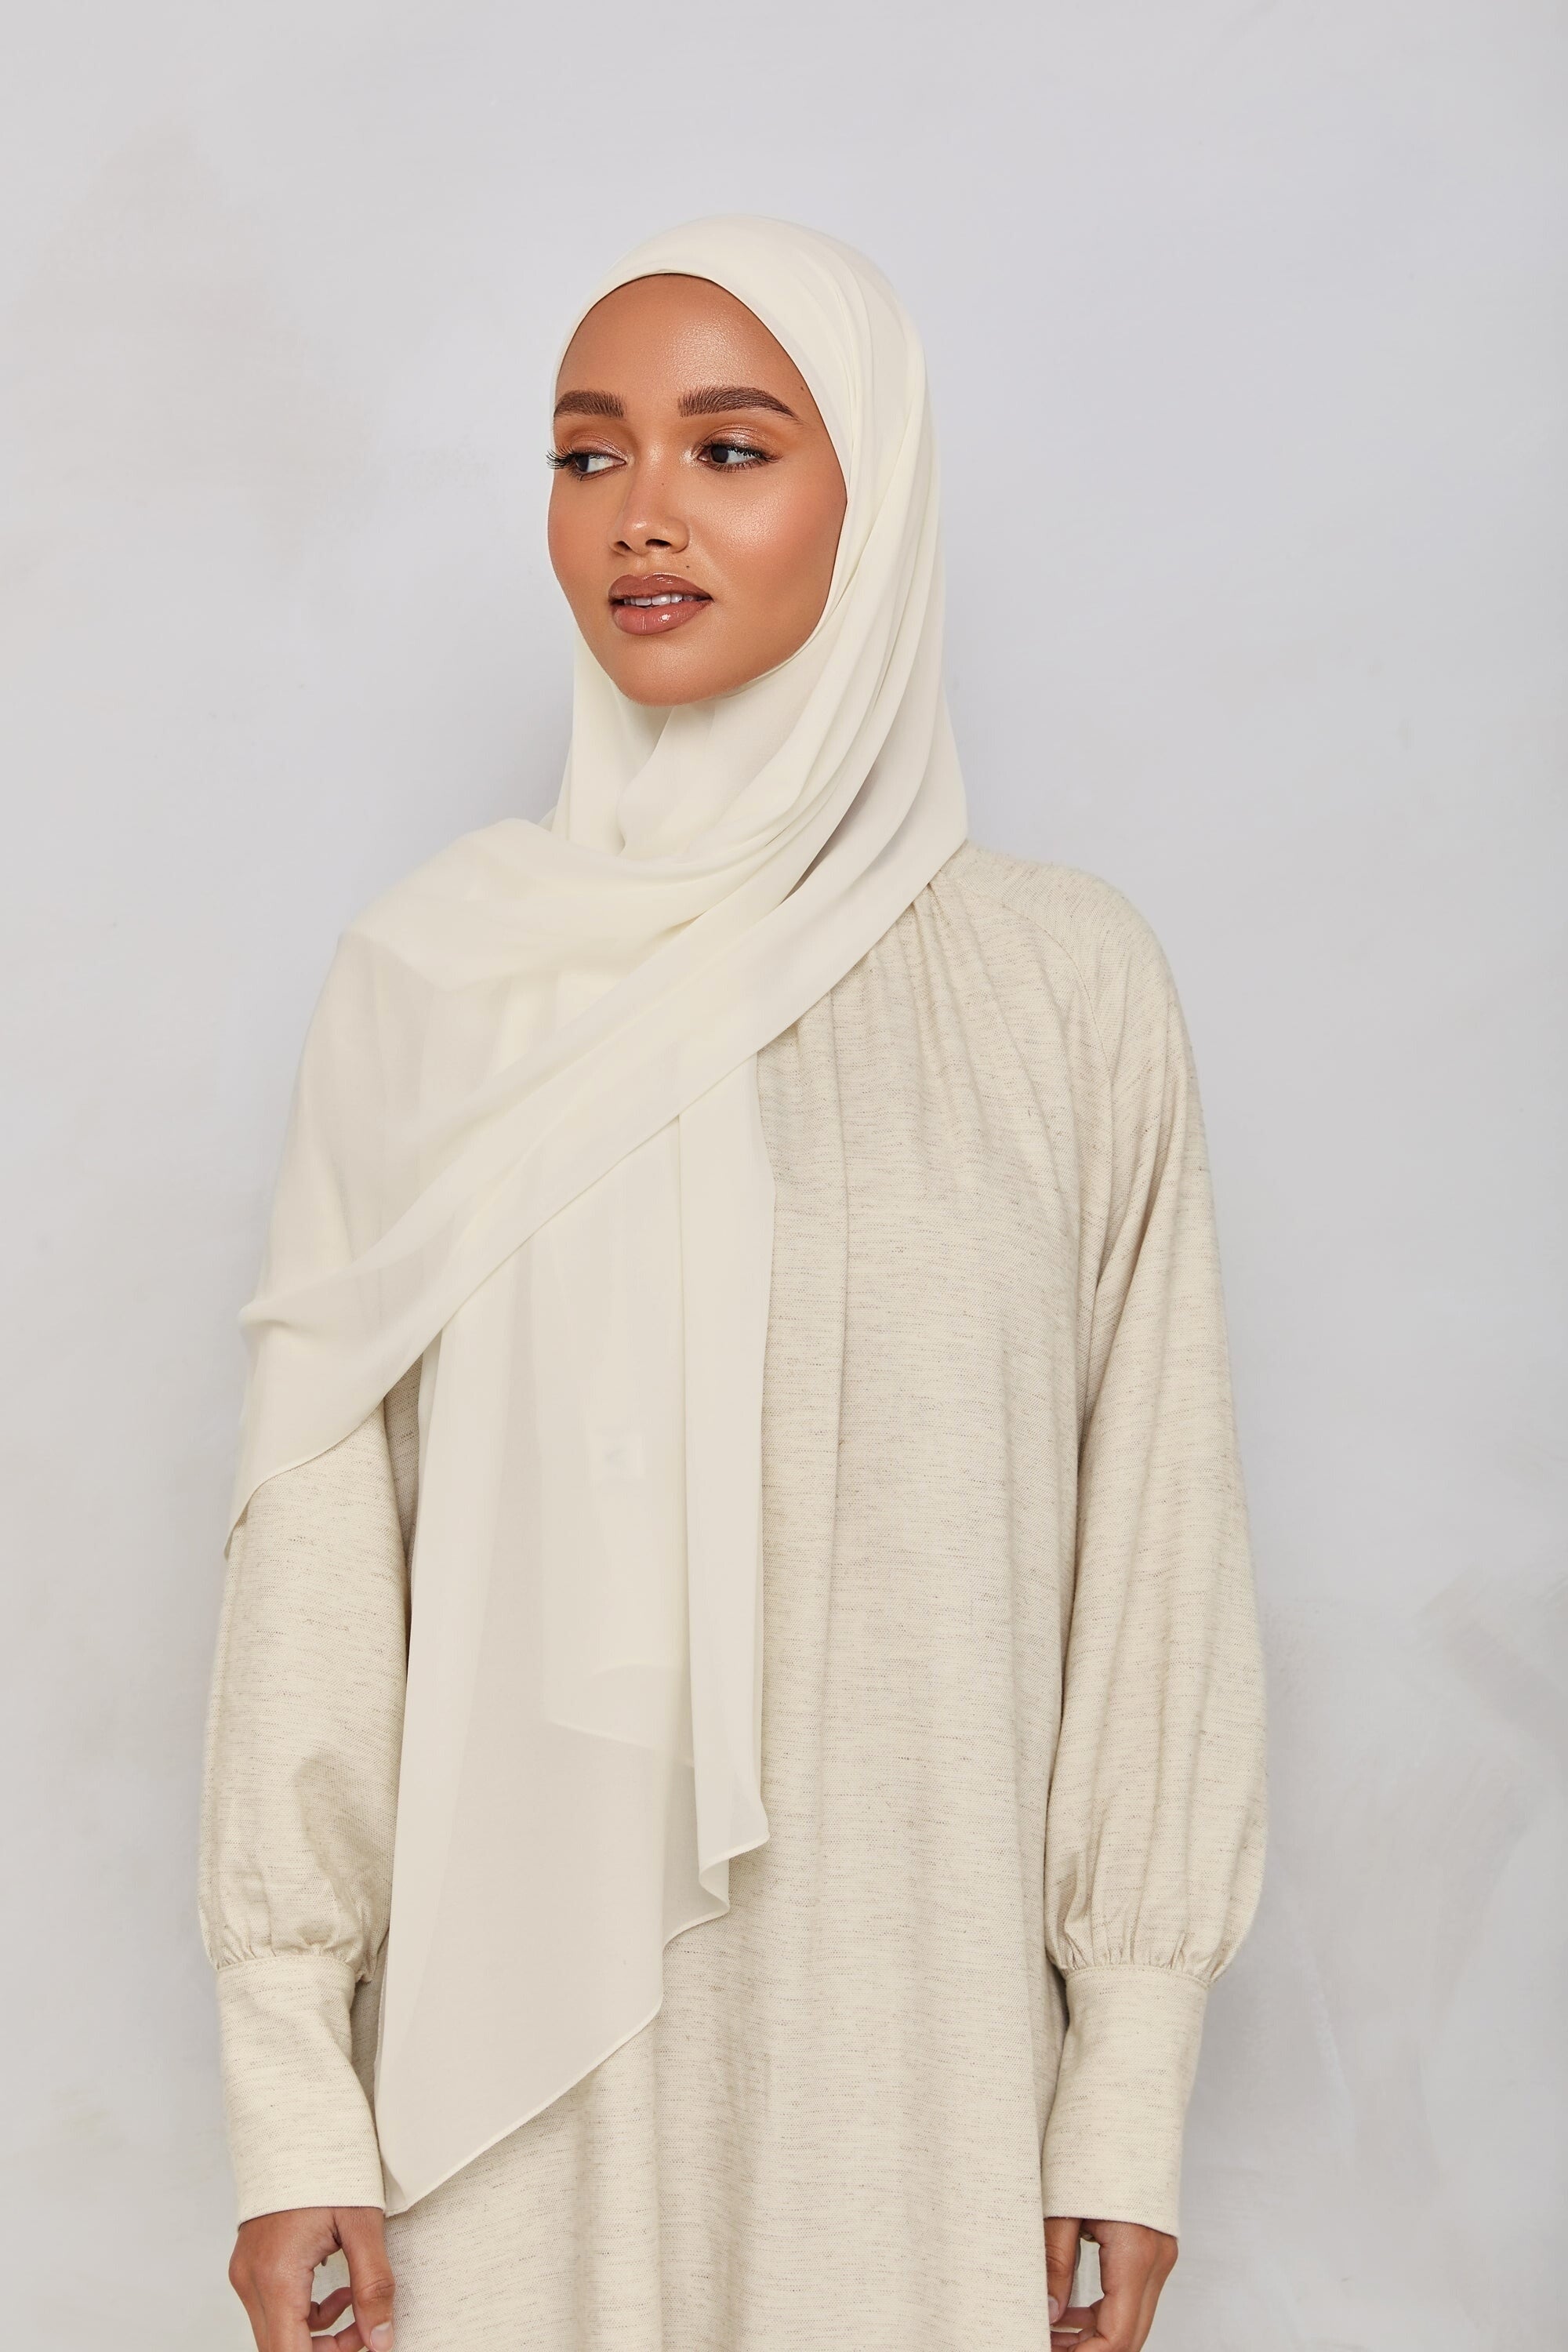 Chiffon LITE Hijab - Off White Hijabs Veiled 